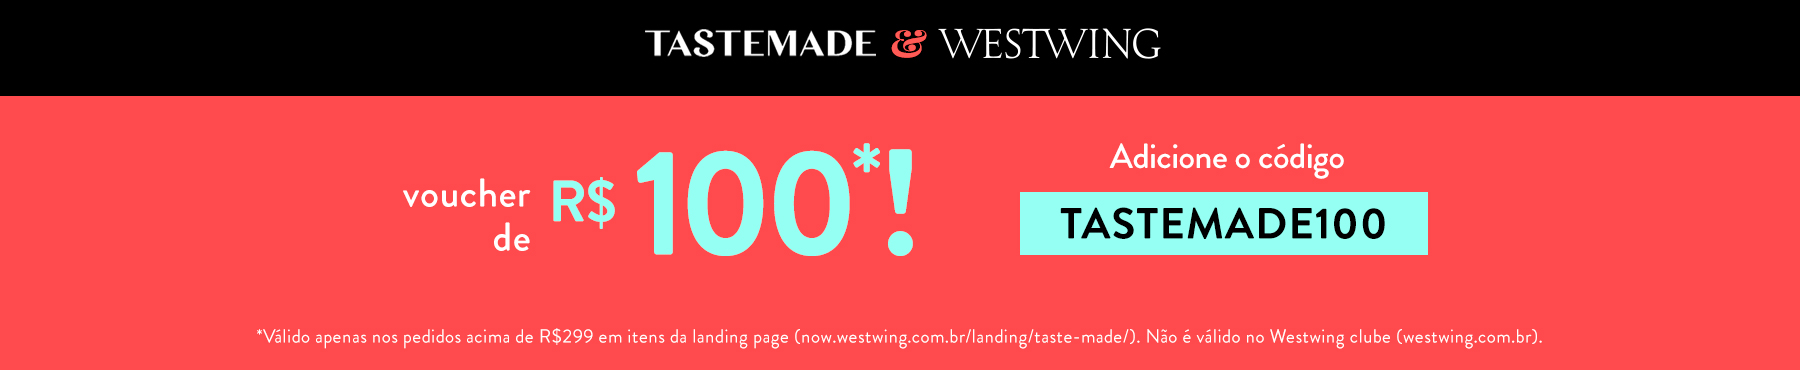 Tastemade & Westwing | WestwingNow